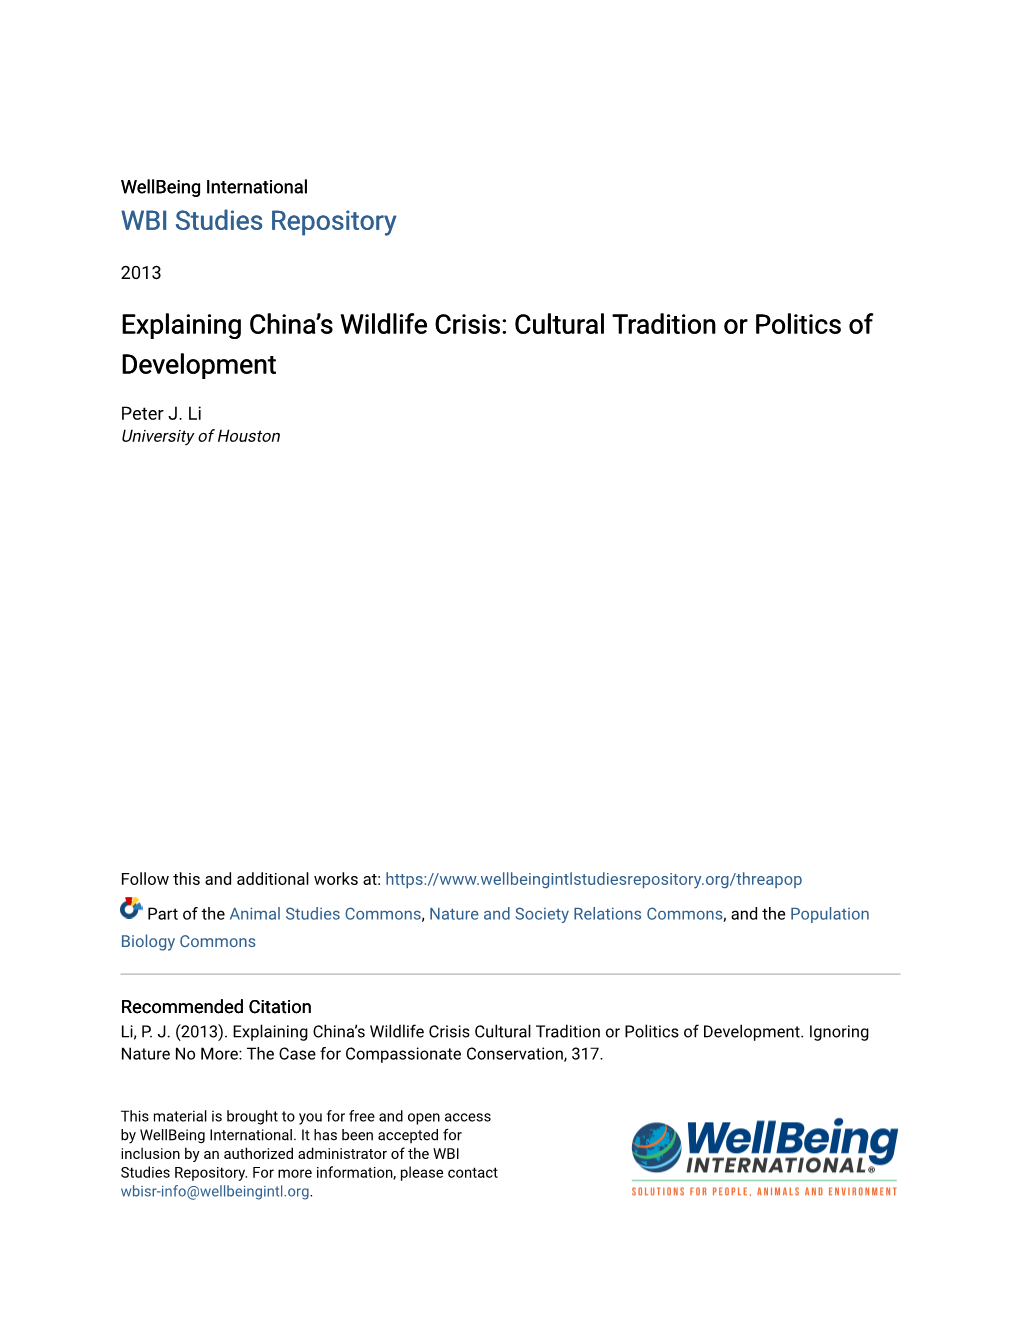 Explaining China's Wildlife Crisis: Cultural Tradition Or Politics of Development